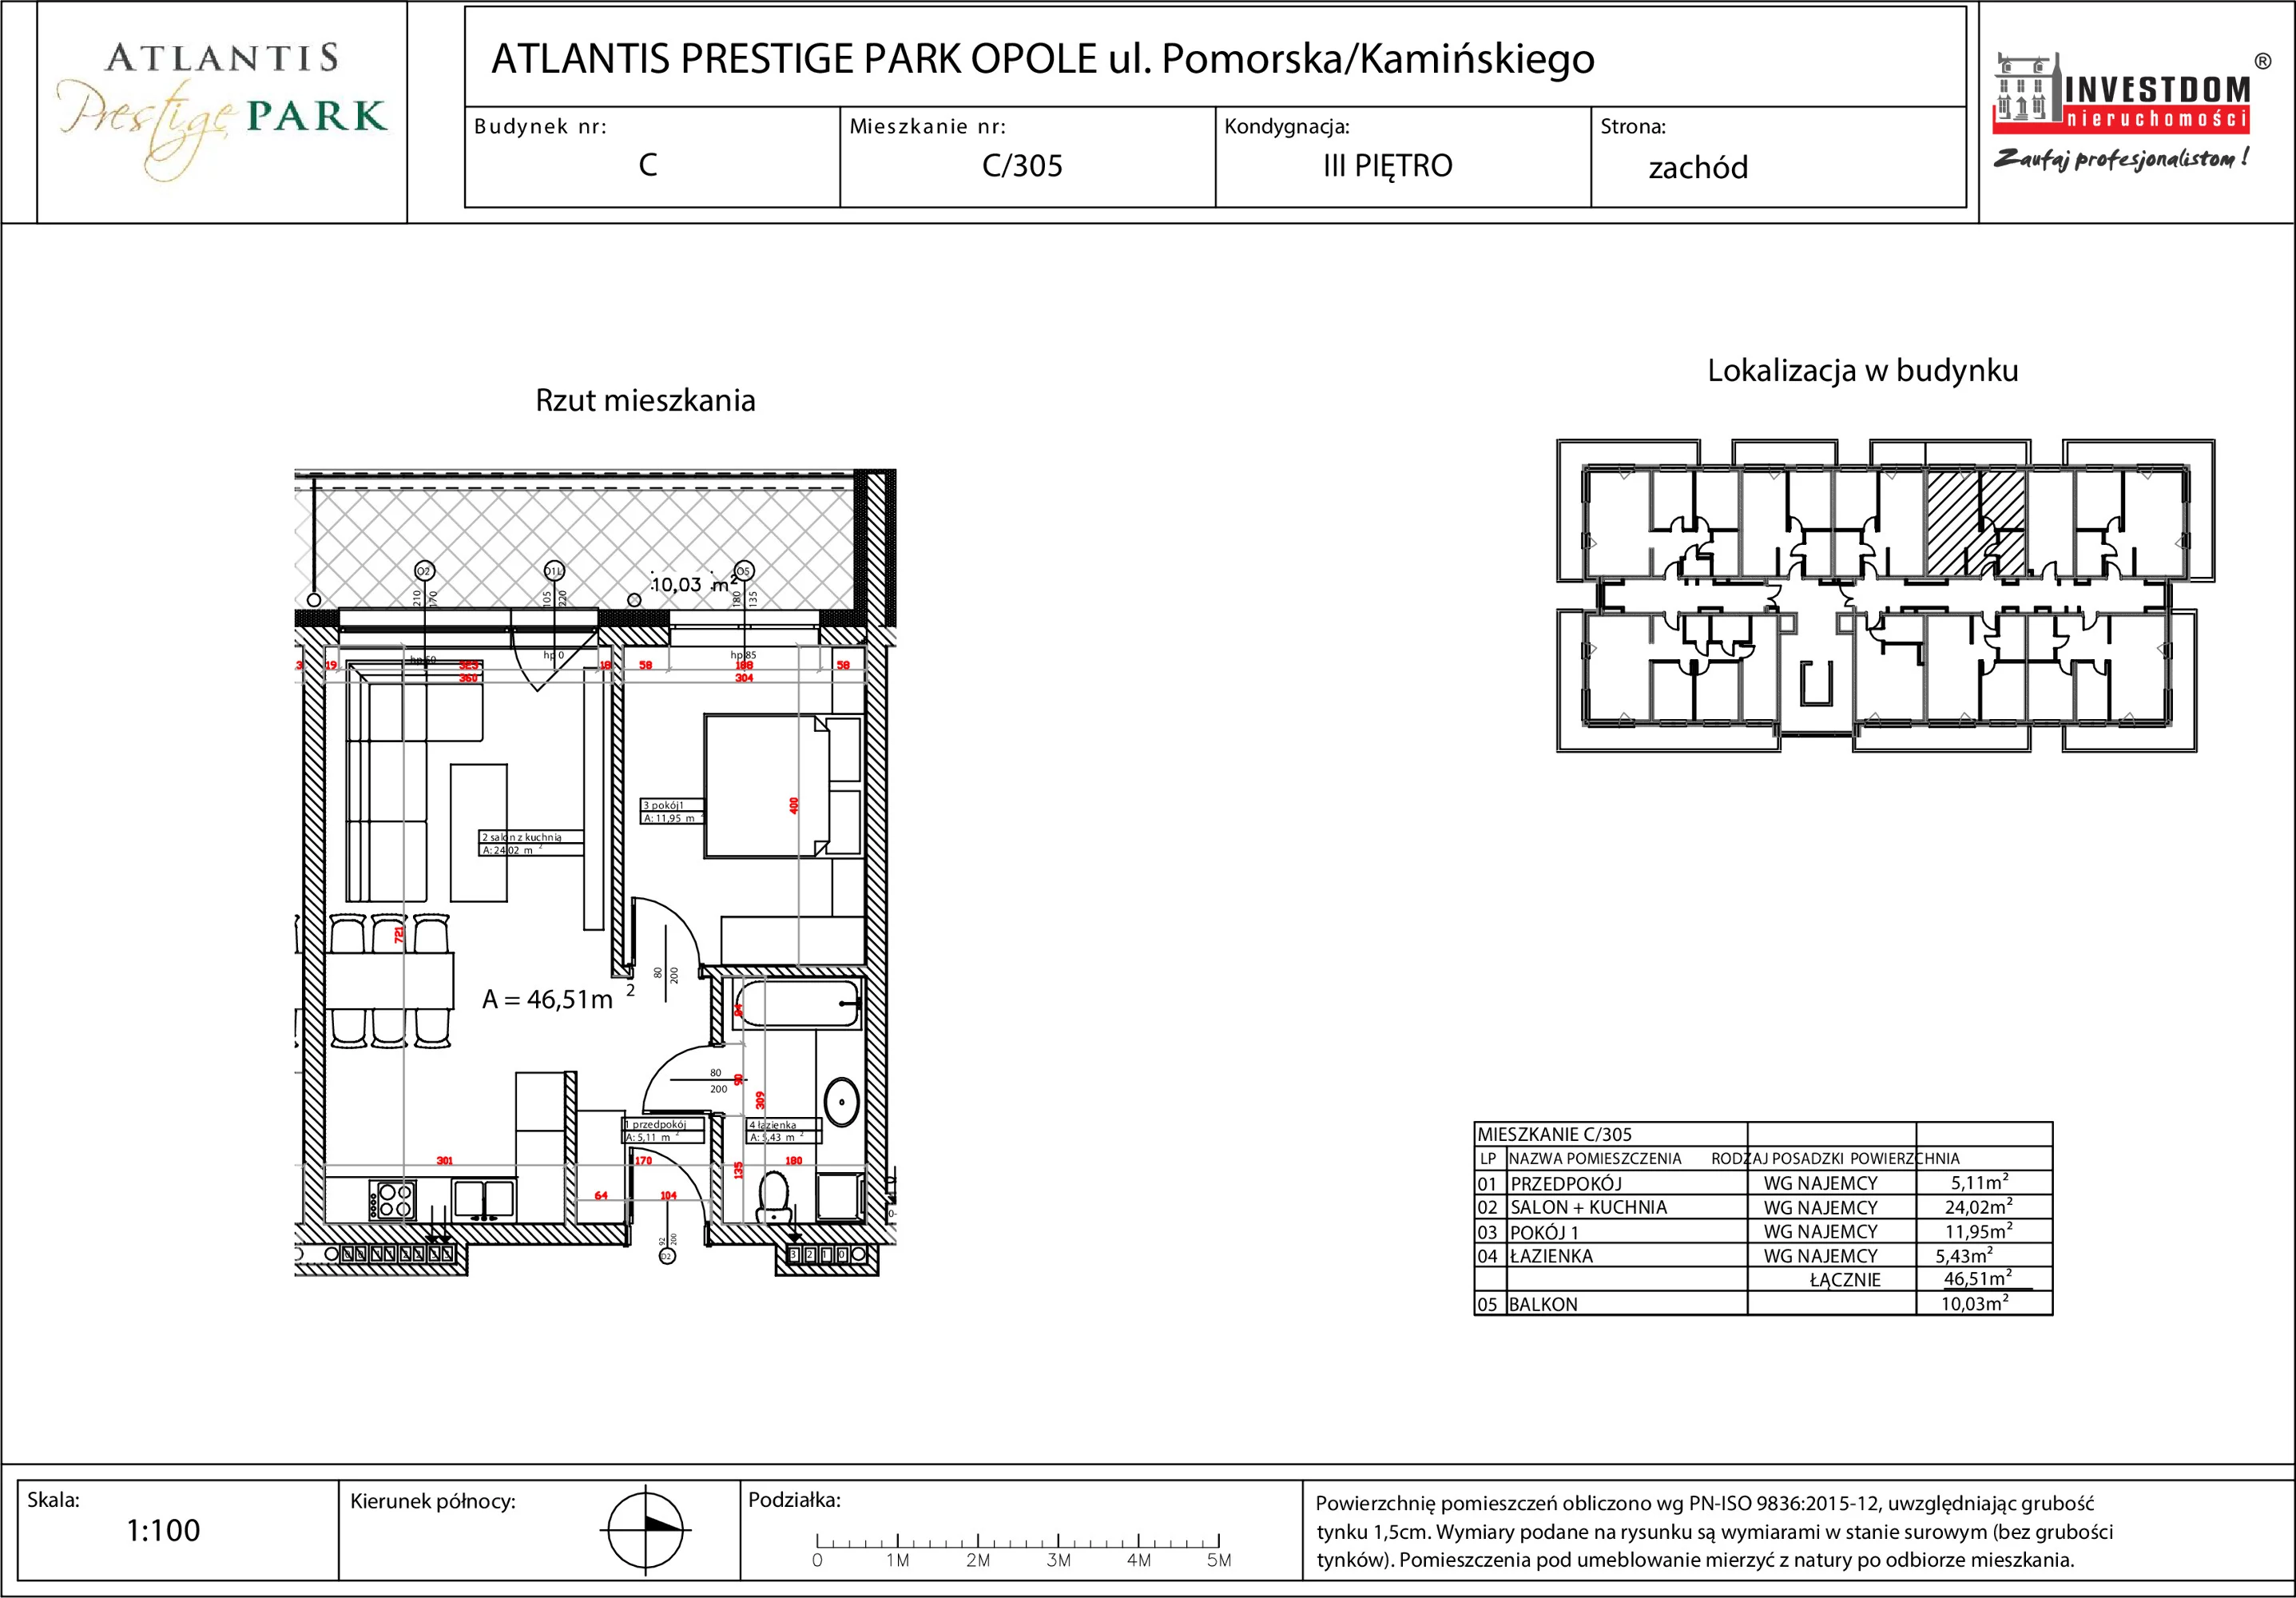 Apartament 46,51 m², piętro 3, oferta nr C/305, Atlantis Prestige Park, Opole, Malinka, ul. Pomorska / Zielonogórska / Harcmistrza Kamińskiego